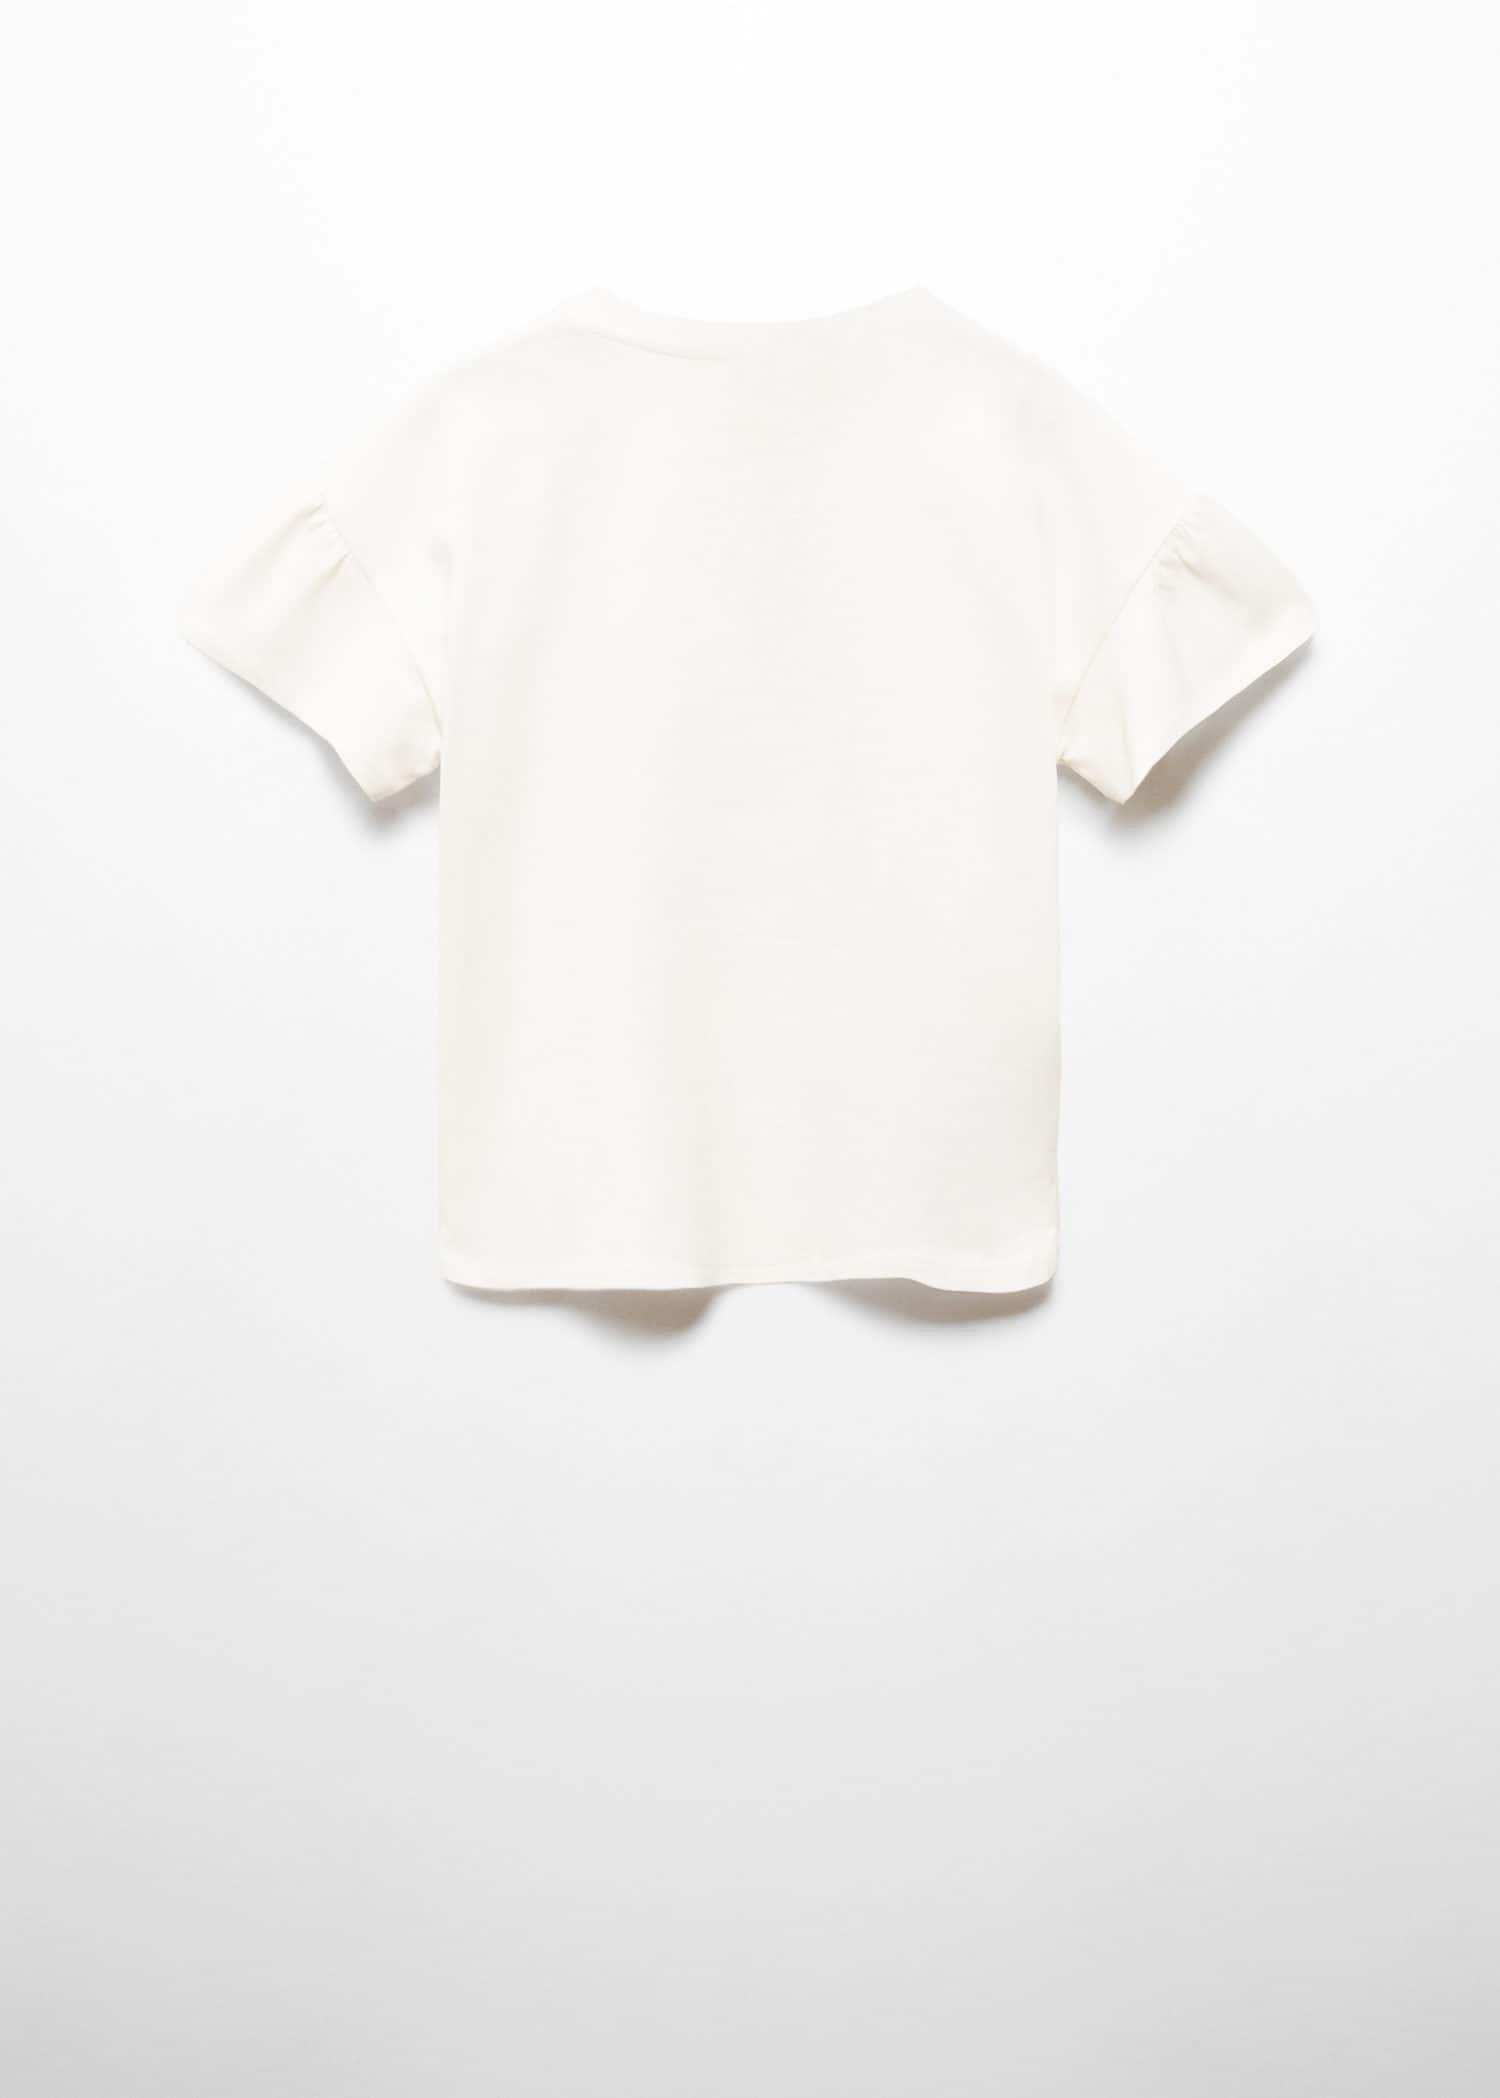 Mango - White Embroidered Details Print T-Shirt, Kids Girls